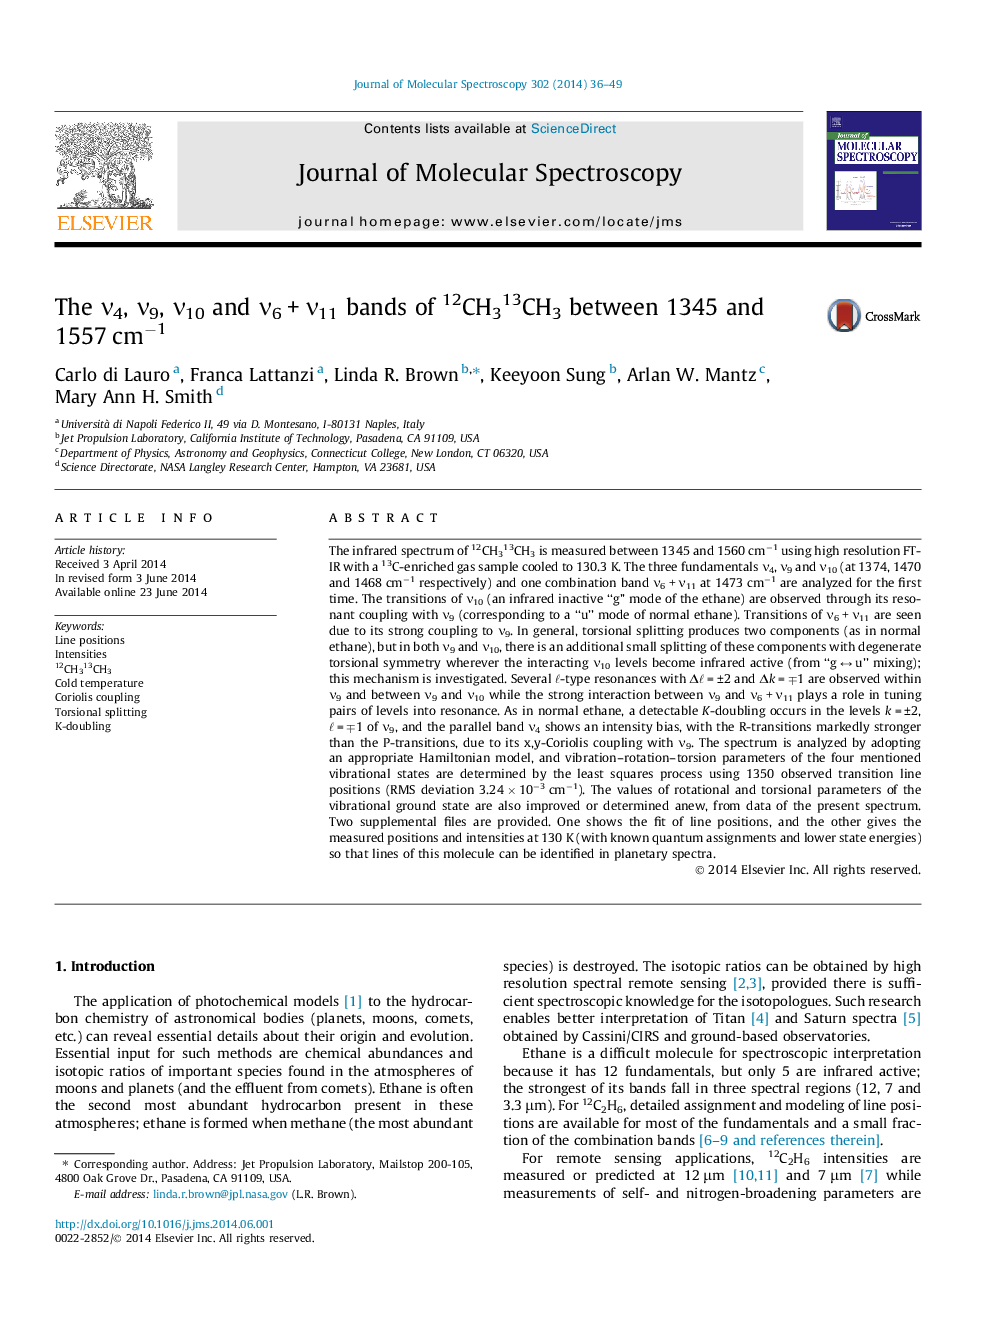 The Î½4, Î½9, Î½10 and Î½6Â +Â Î½11 bands of 12CH313CH3 between 1345 and 1557Â cmâ1